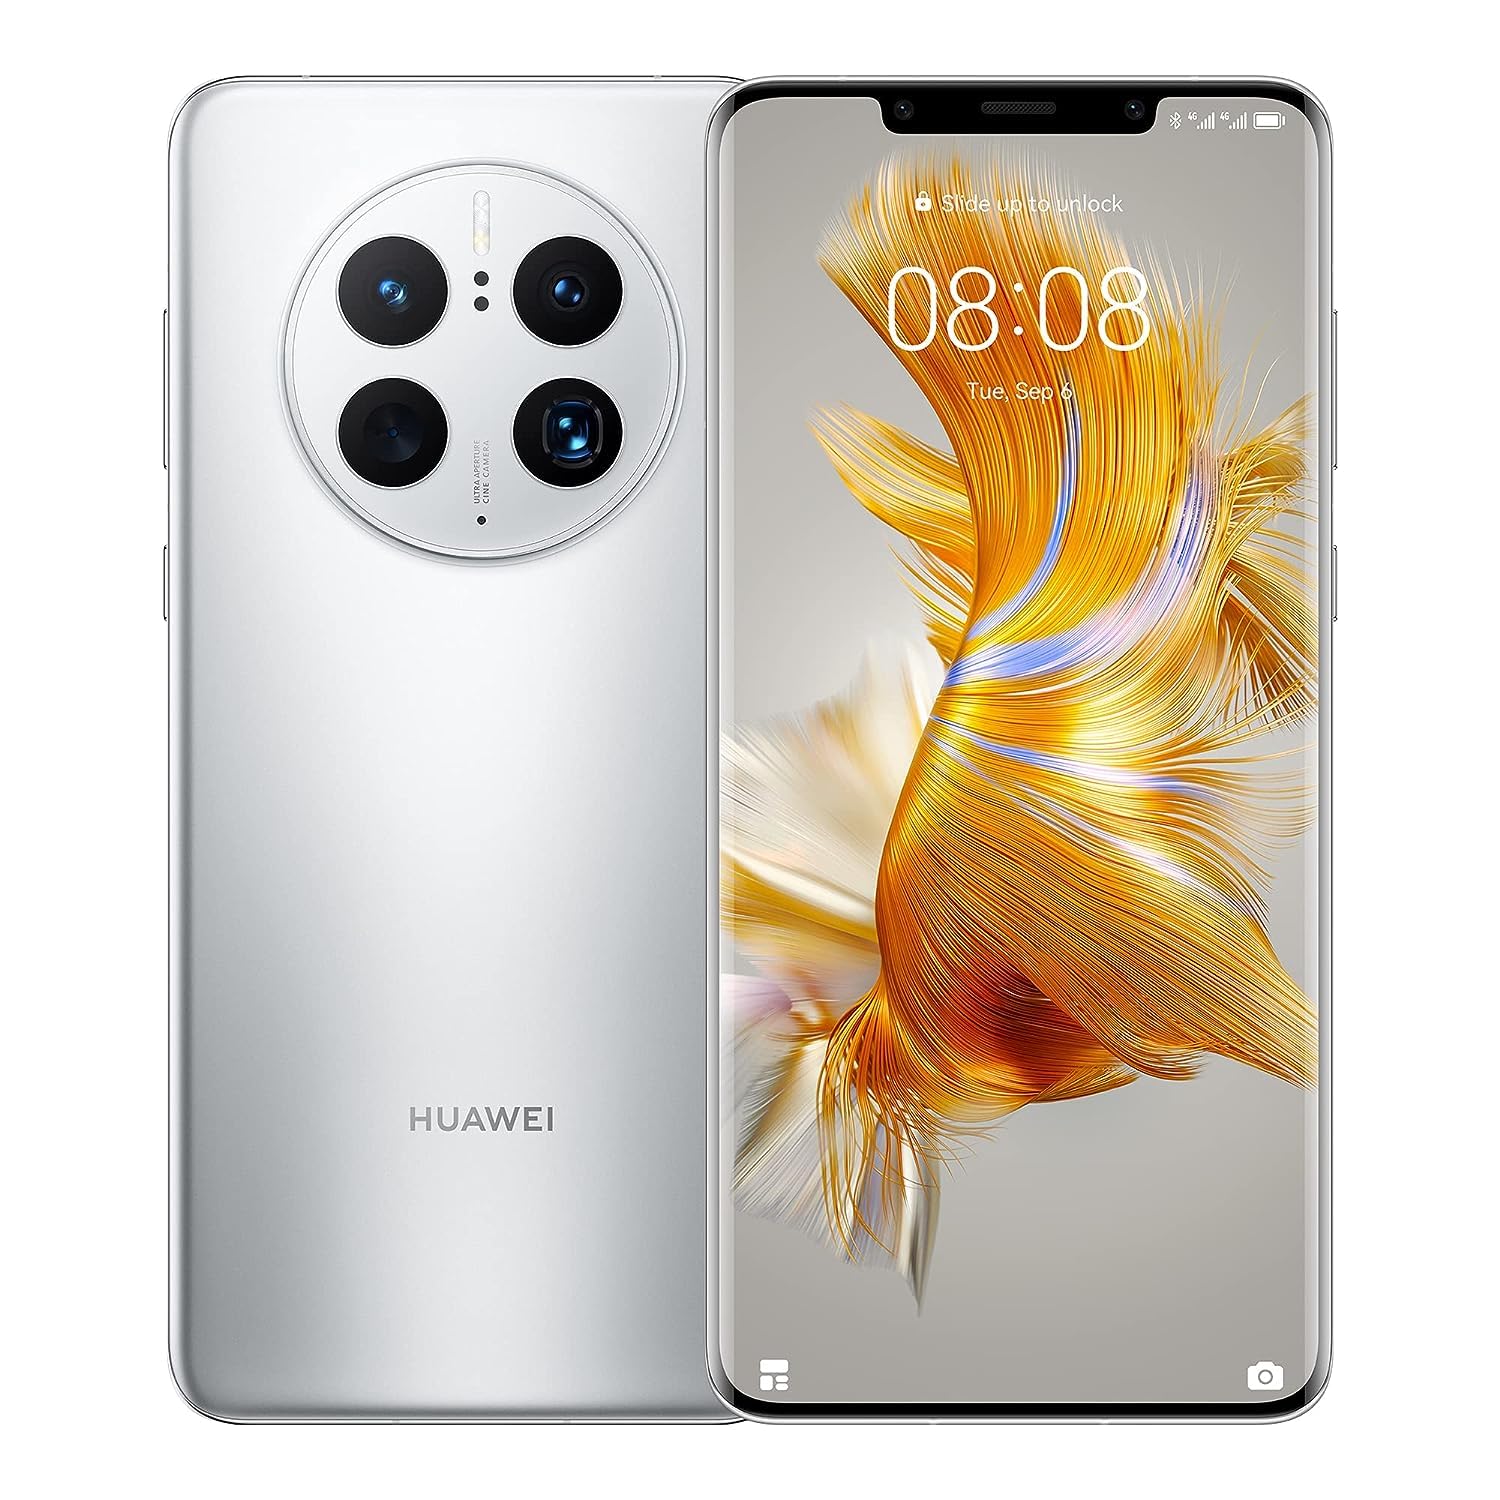 HUAWEI Mate 50 Pro Dual-SIM 256GB ROM + 8GB RAM (Only GSM | No CDMA) Factory Unlocked 4G/LTE Smartphone (Silver) - International